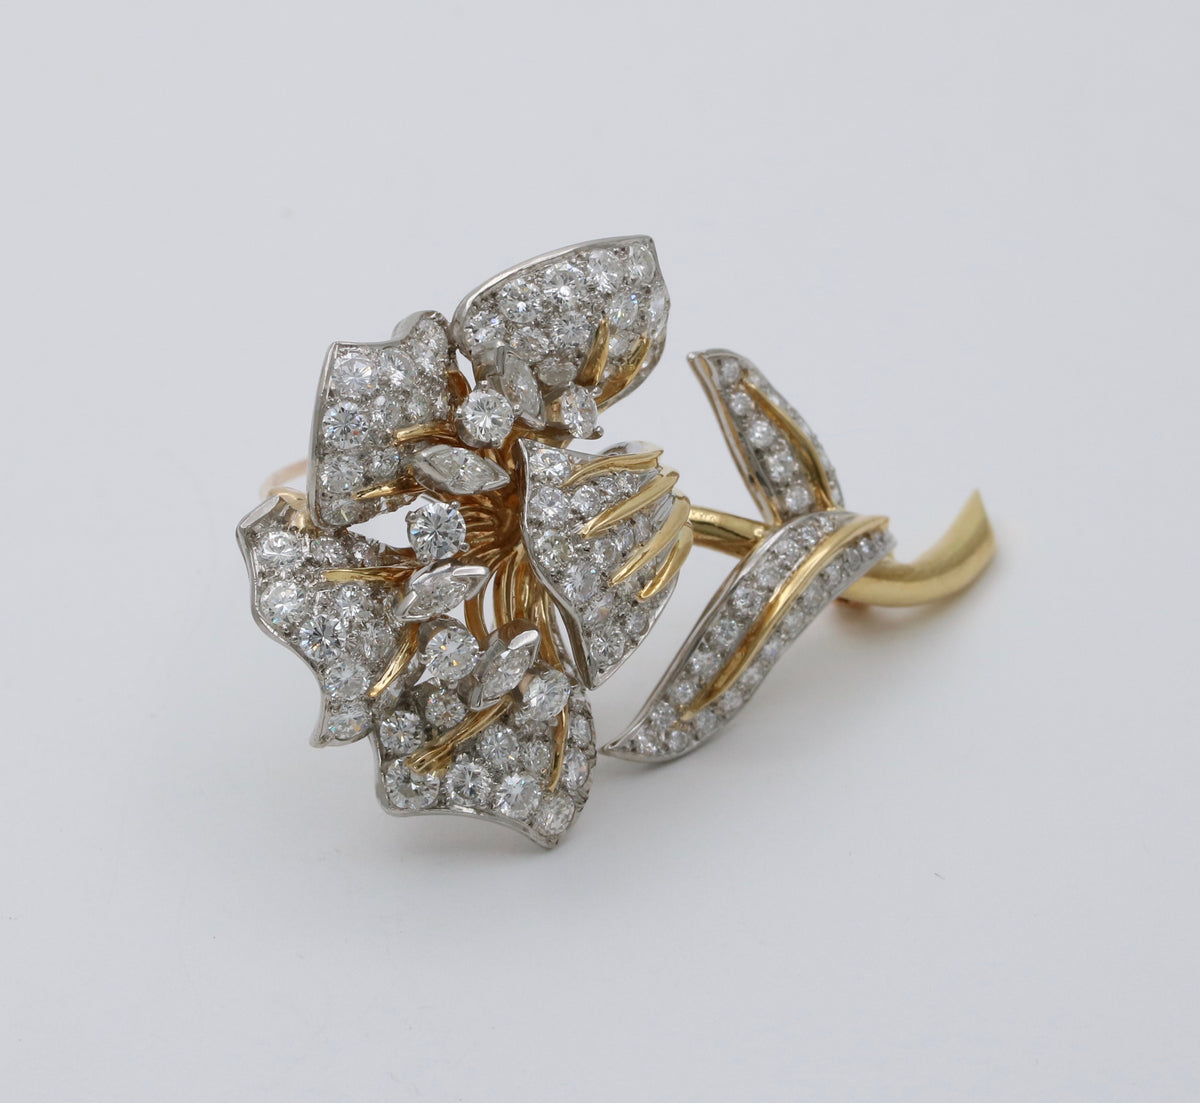 C. 1950 Vintage 1.60 ct. t.w. Diamond Flower Pin in 14kt White Gold